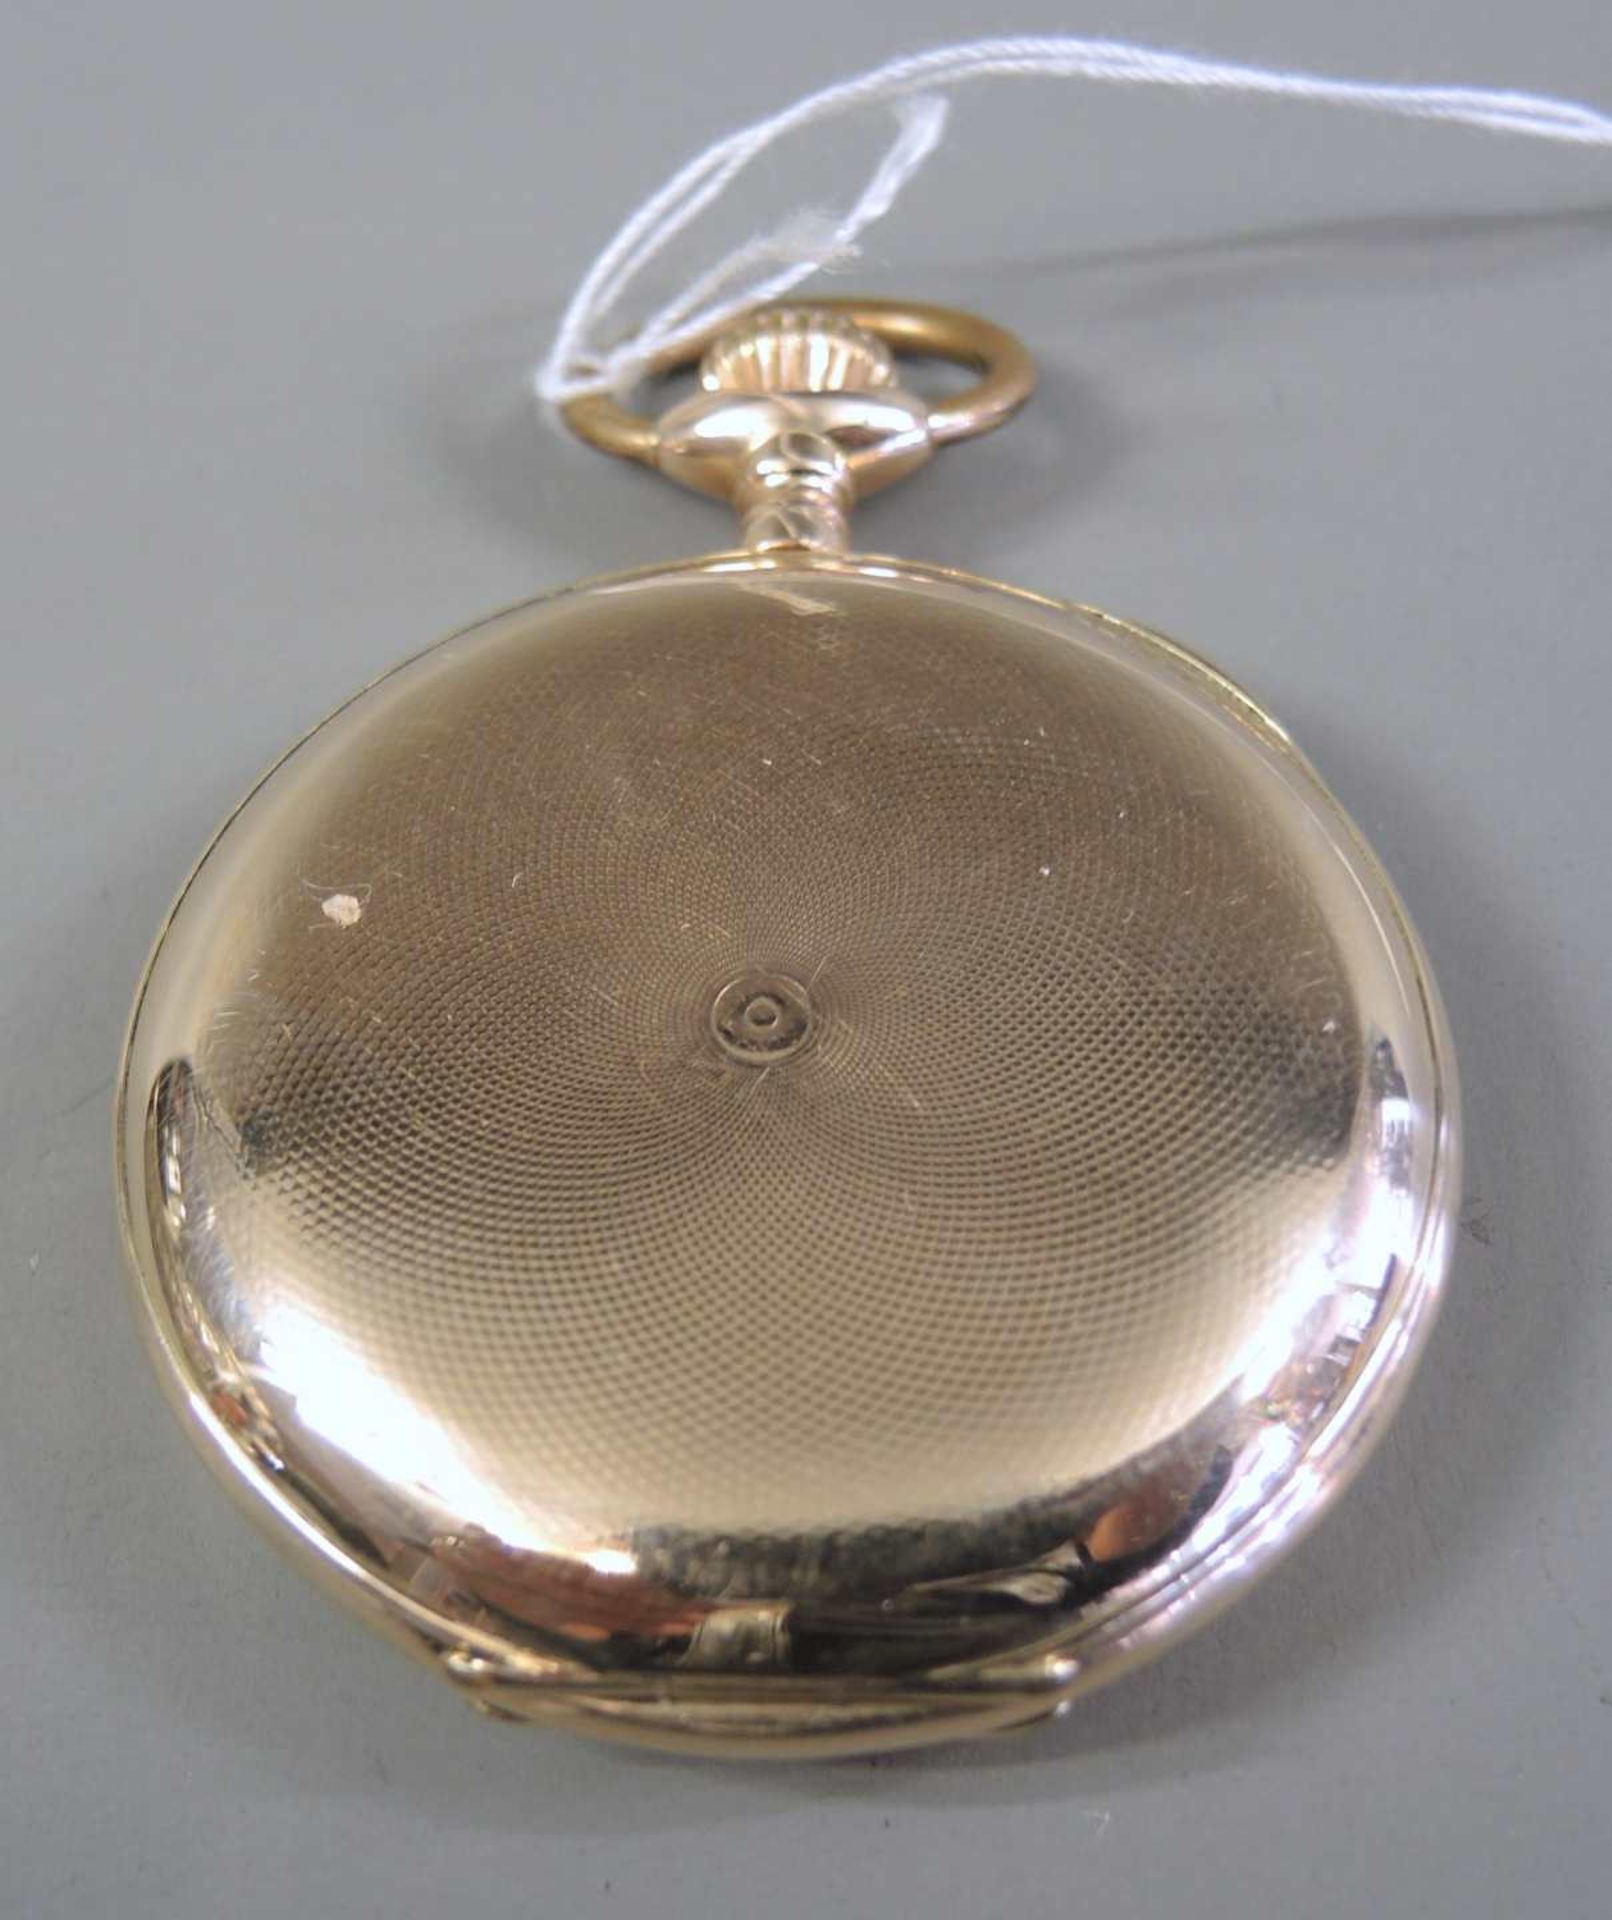 Union Horlogére, Guillochierte Taschenuhr 14 K Gold-Gehäuse, gestempelt. Metall-Stau - Image 3 of 4